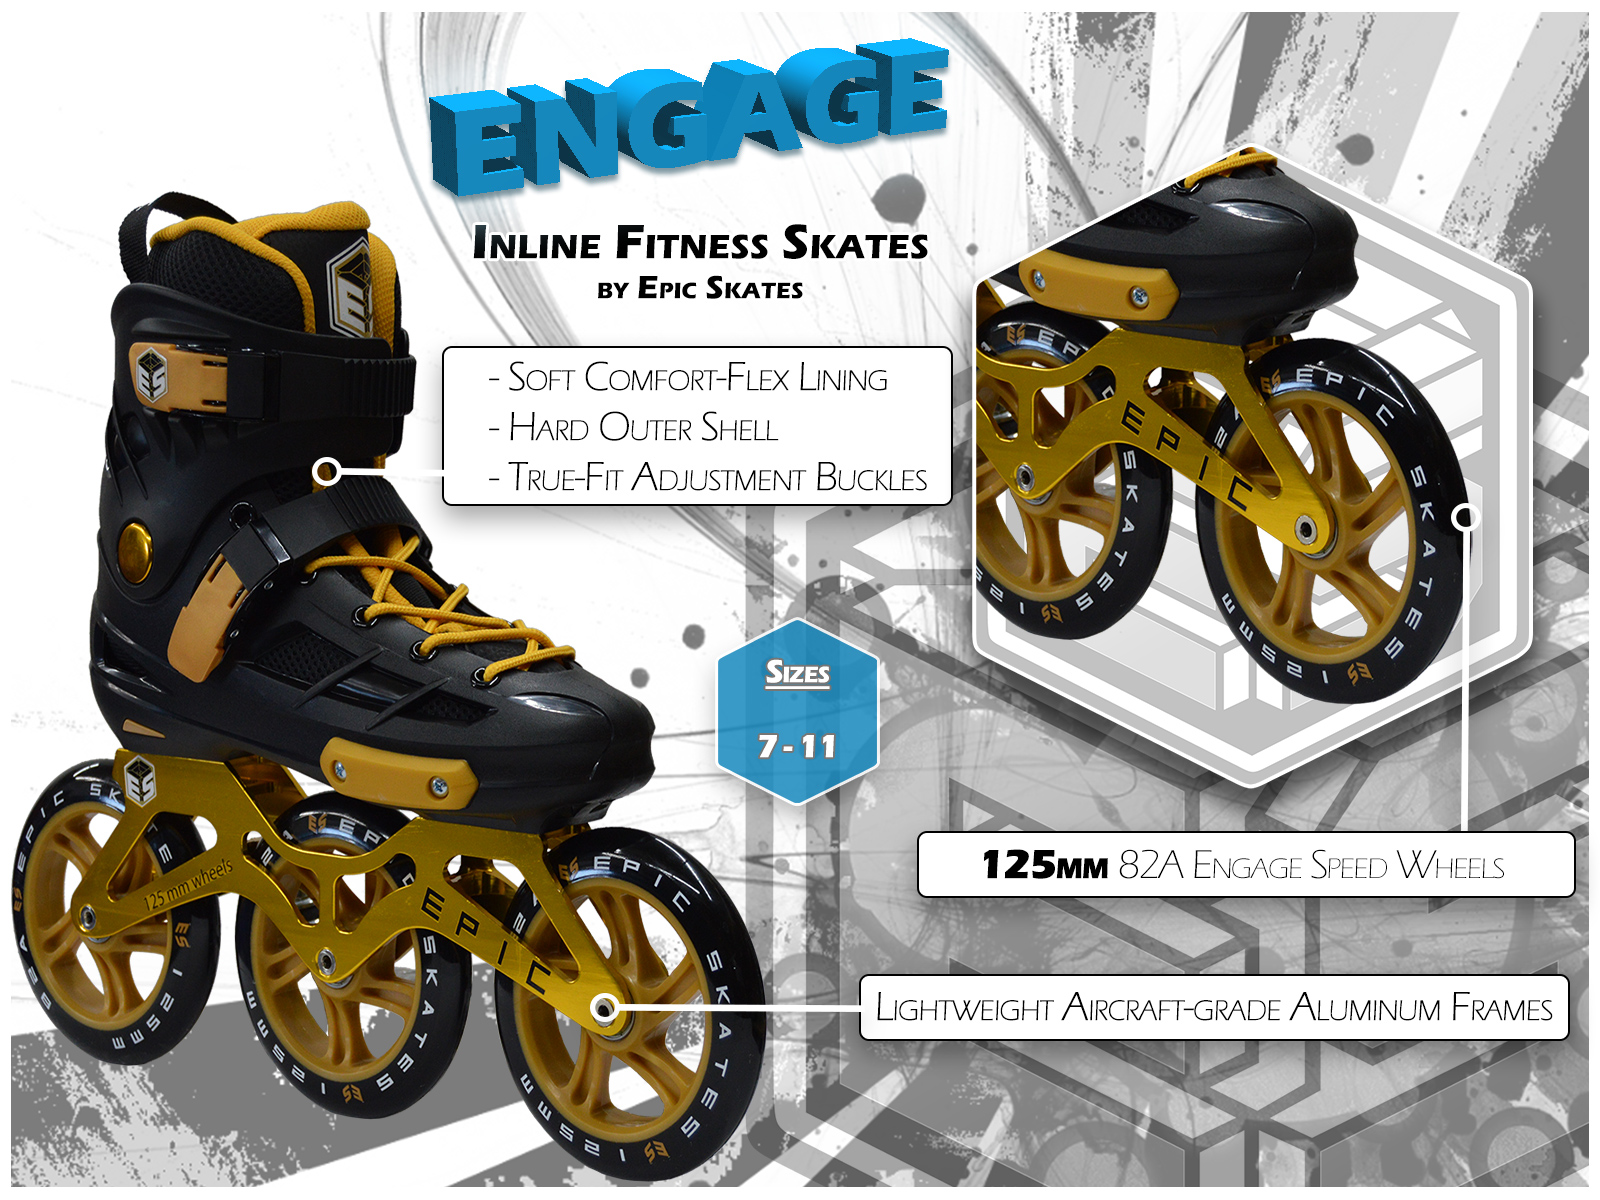 Epic Skates 125mm Engage 3-Wheel Inline Speed Skates New 